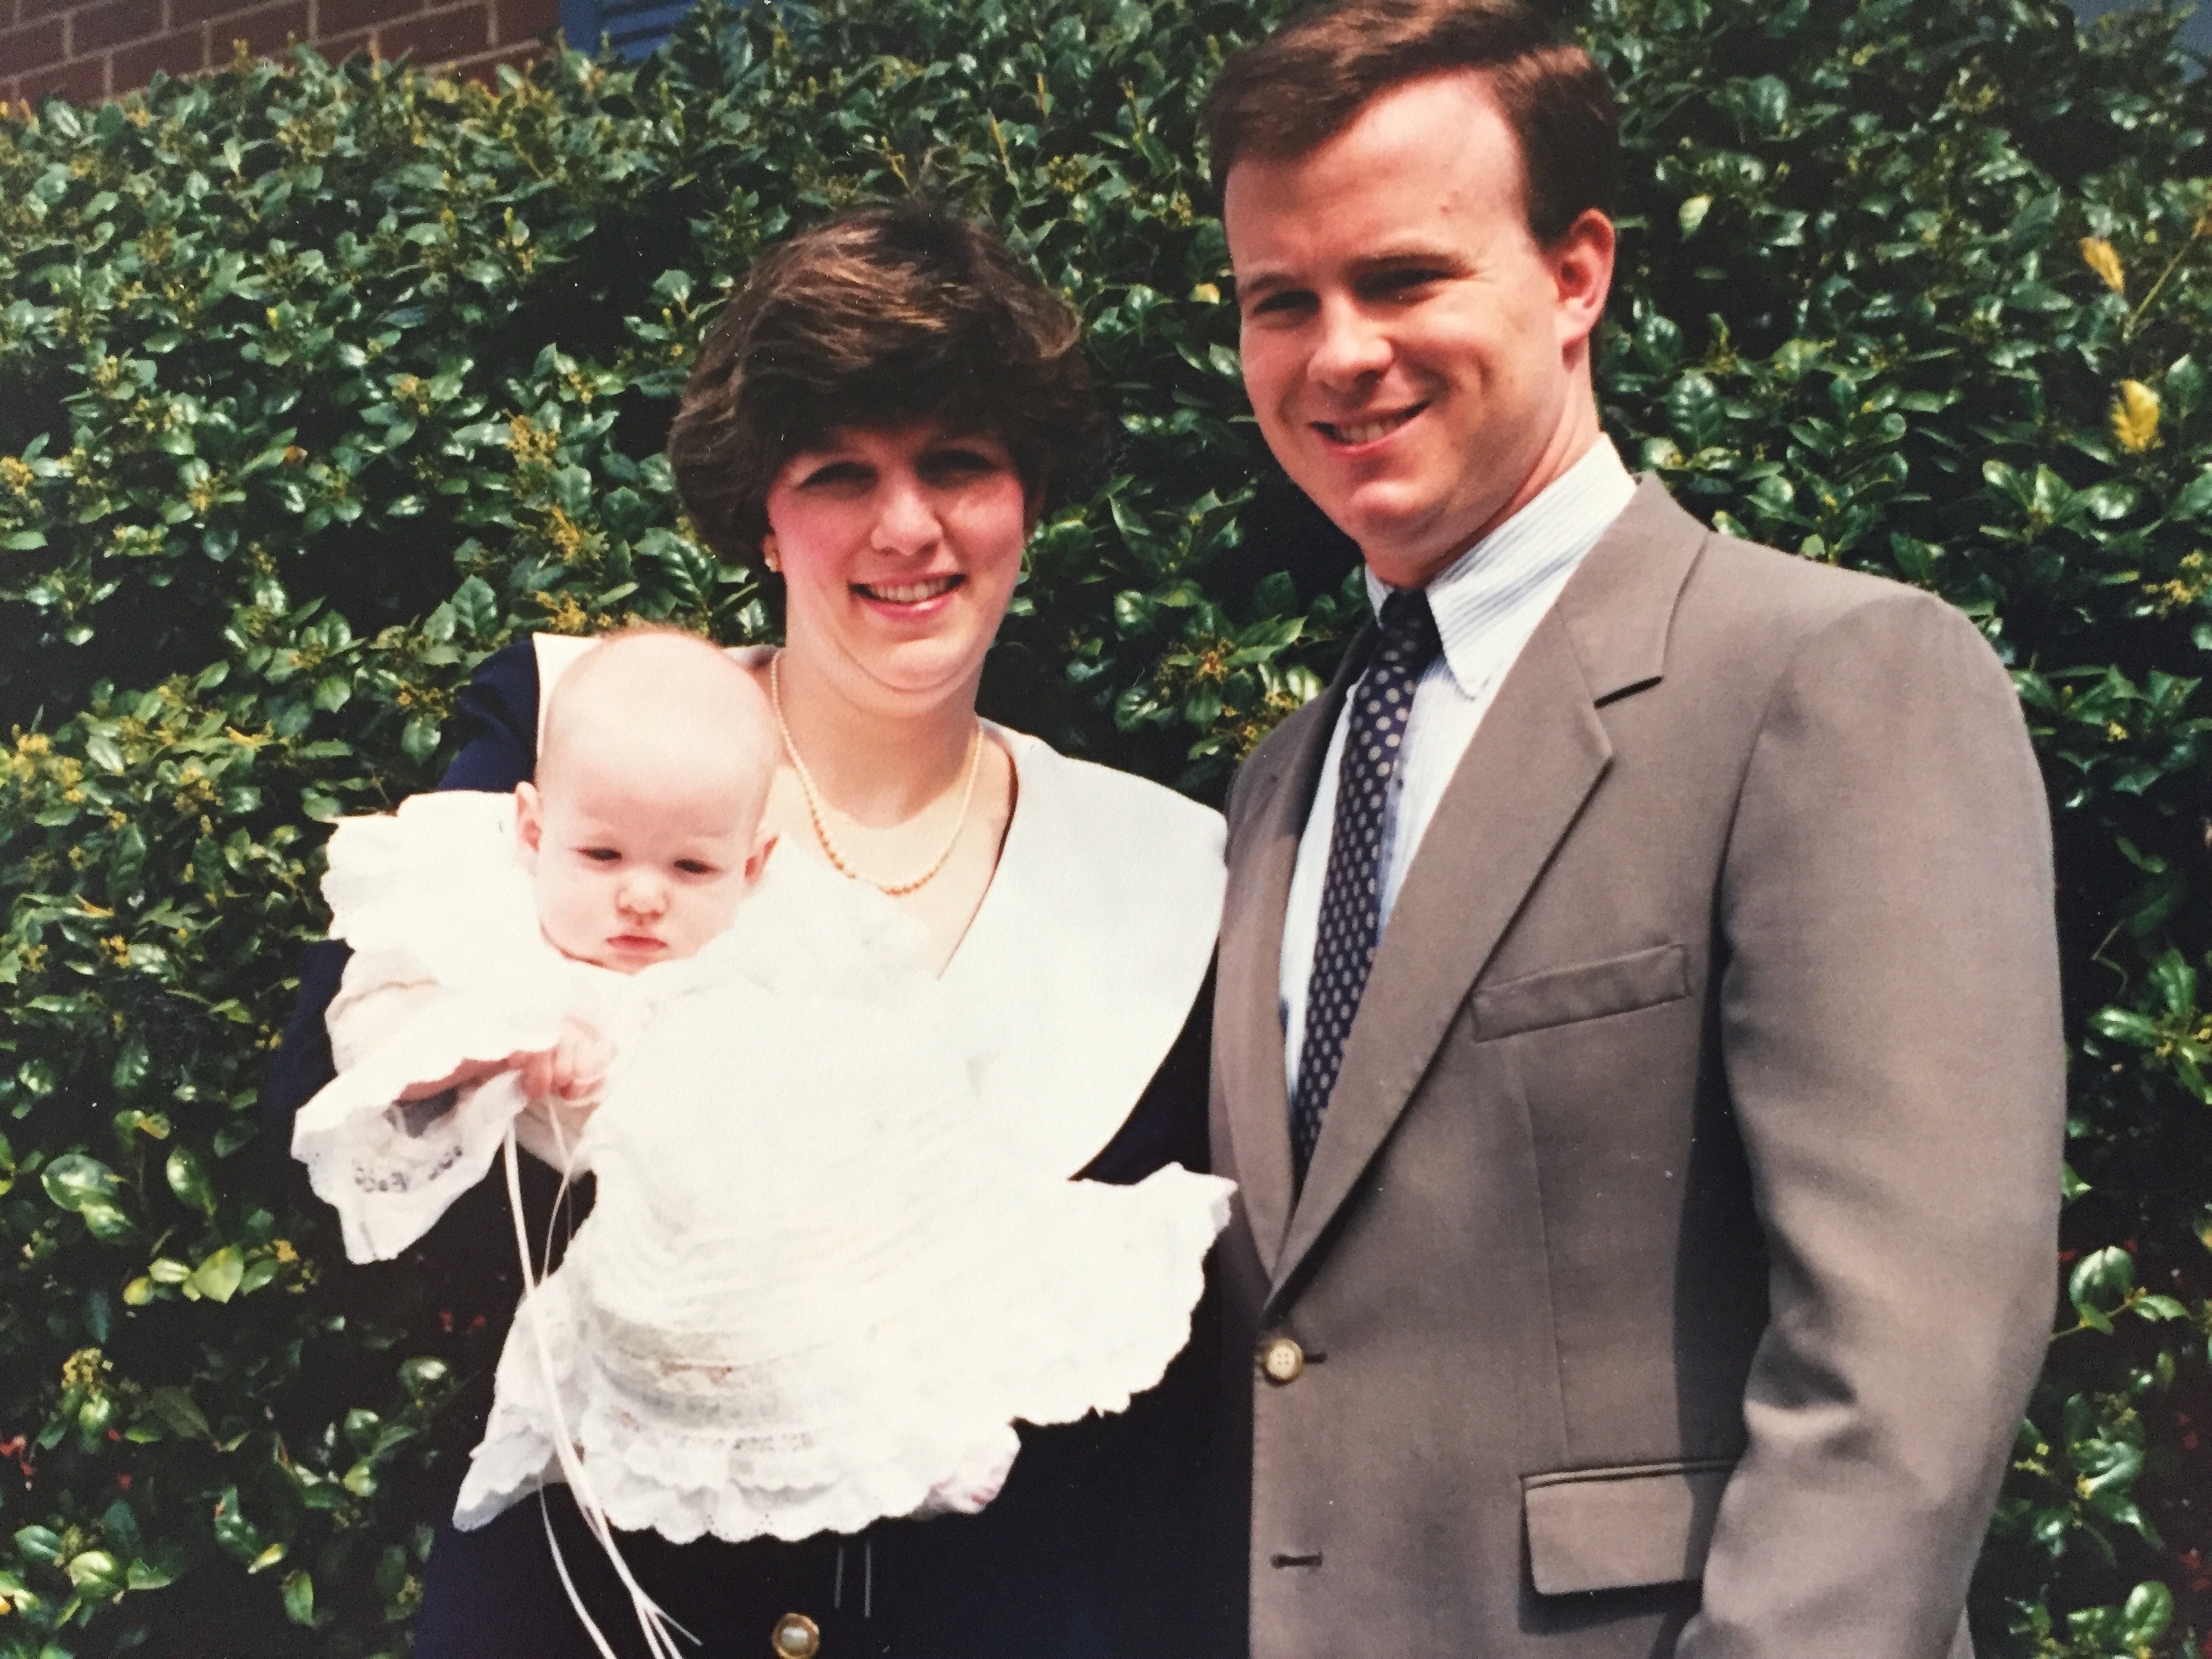 My Baptism Story | Blairblogs.com